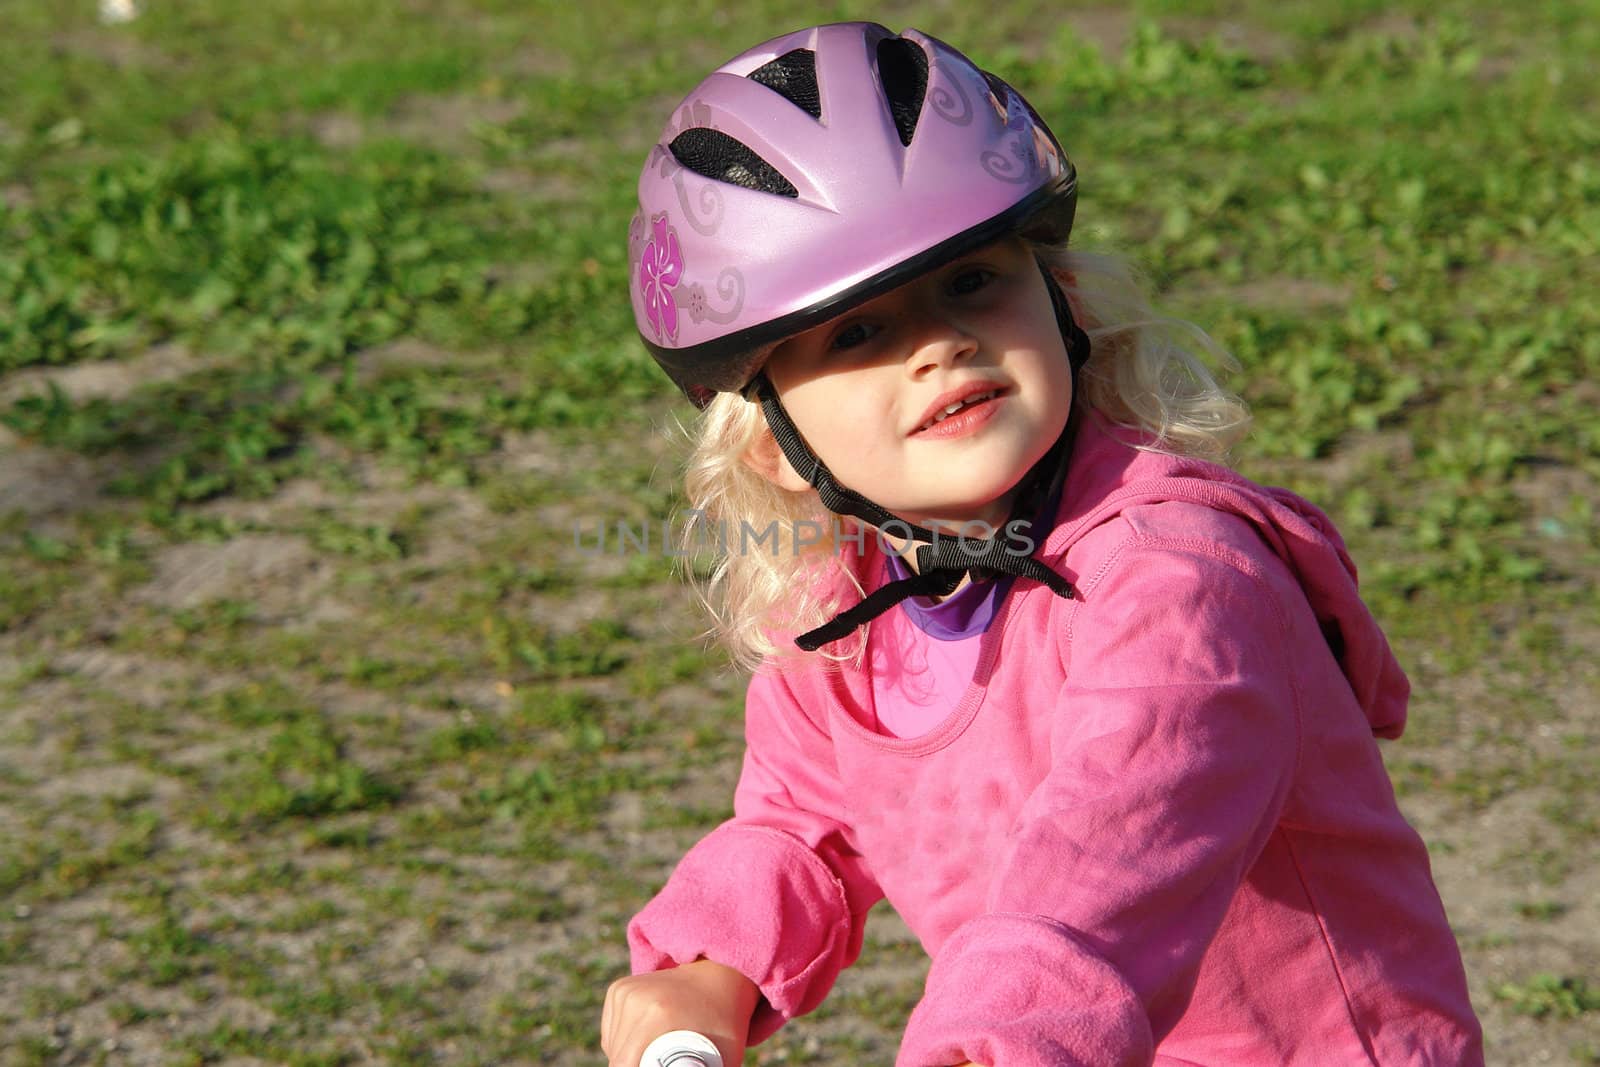 Cute little girl with a helmet riding a bike